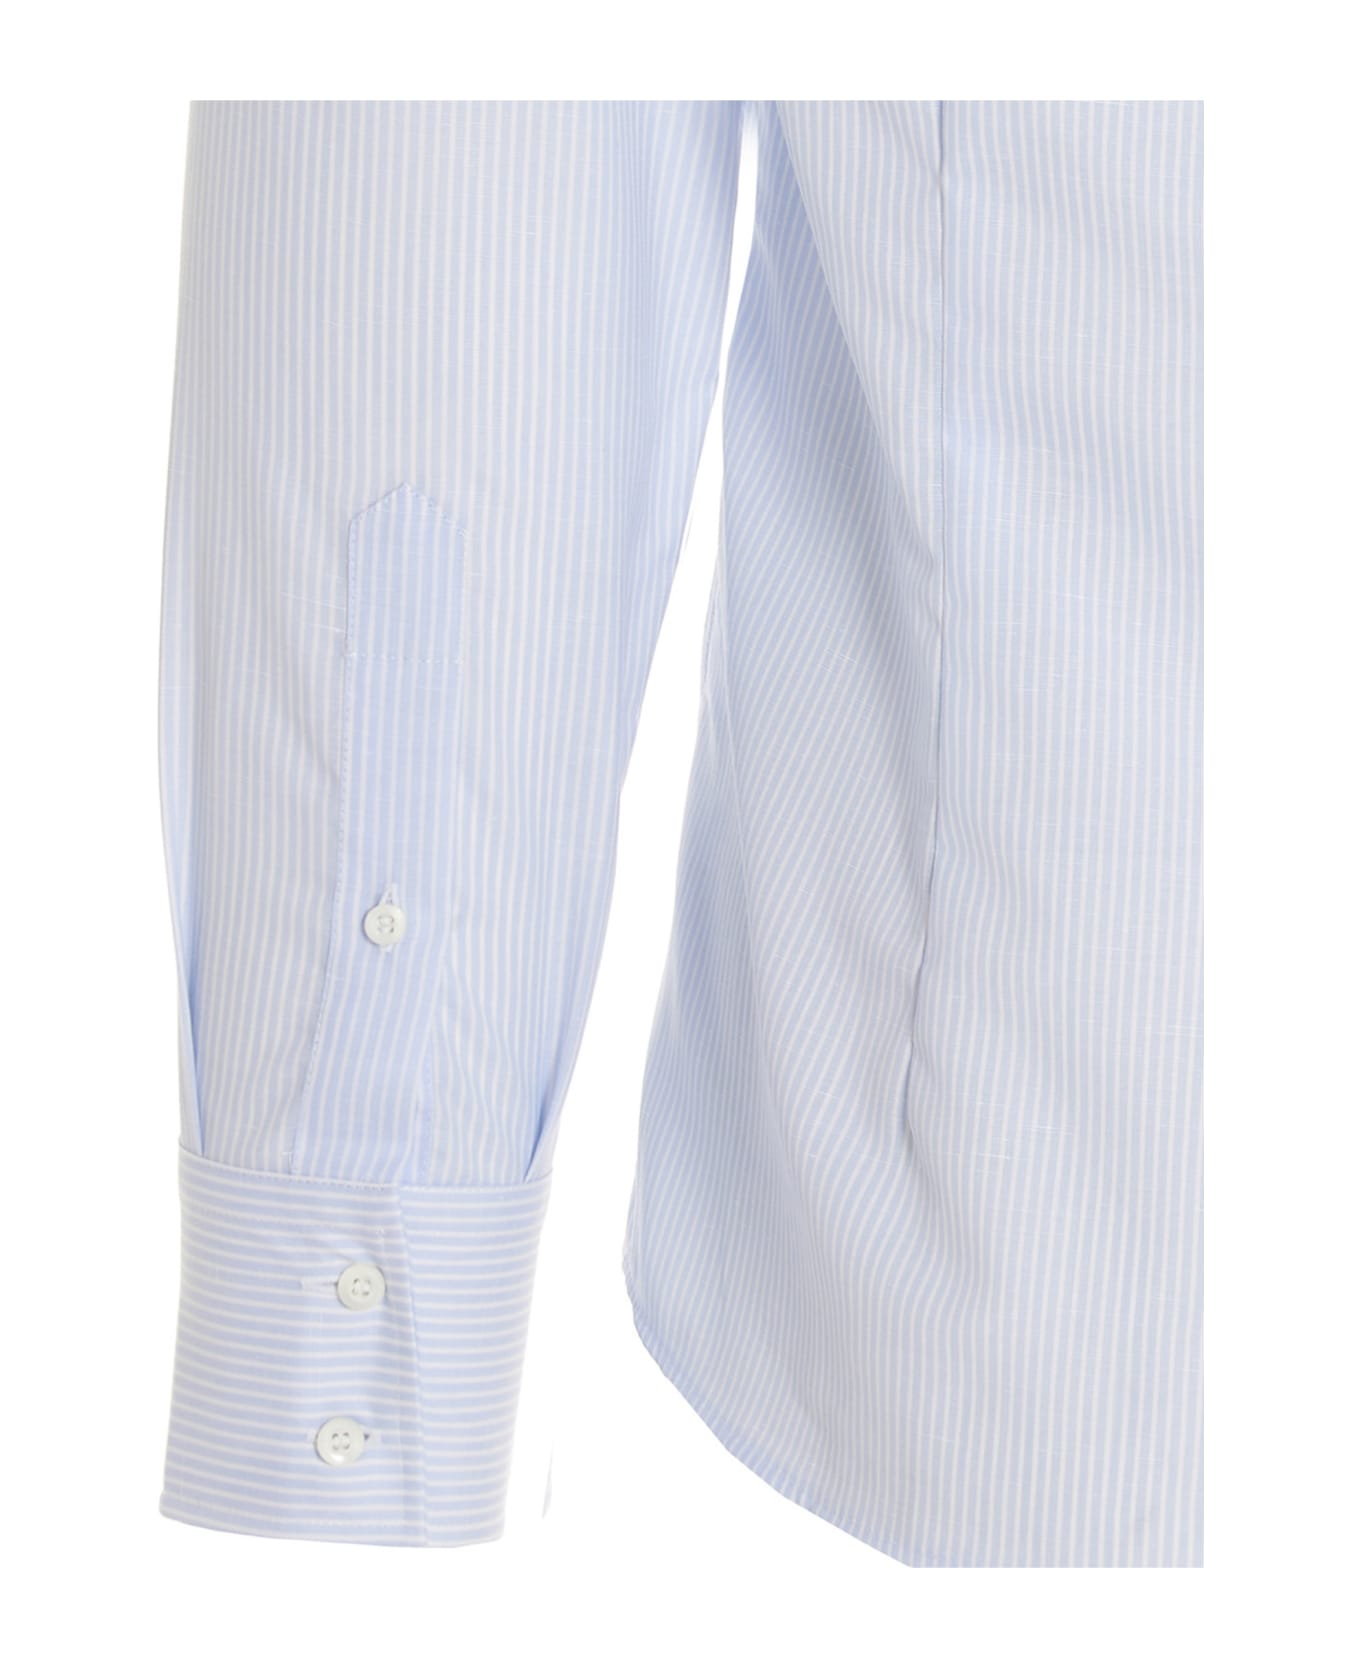 Brunello Cucinelli Striped Cotton Shirt - Light Blue